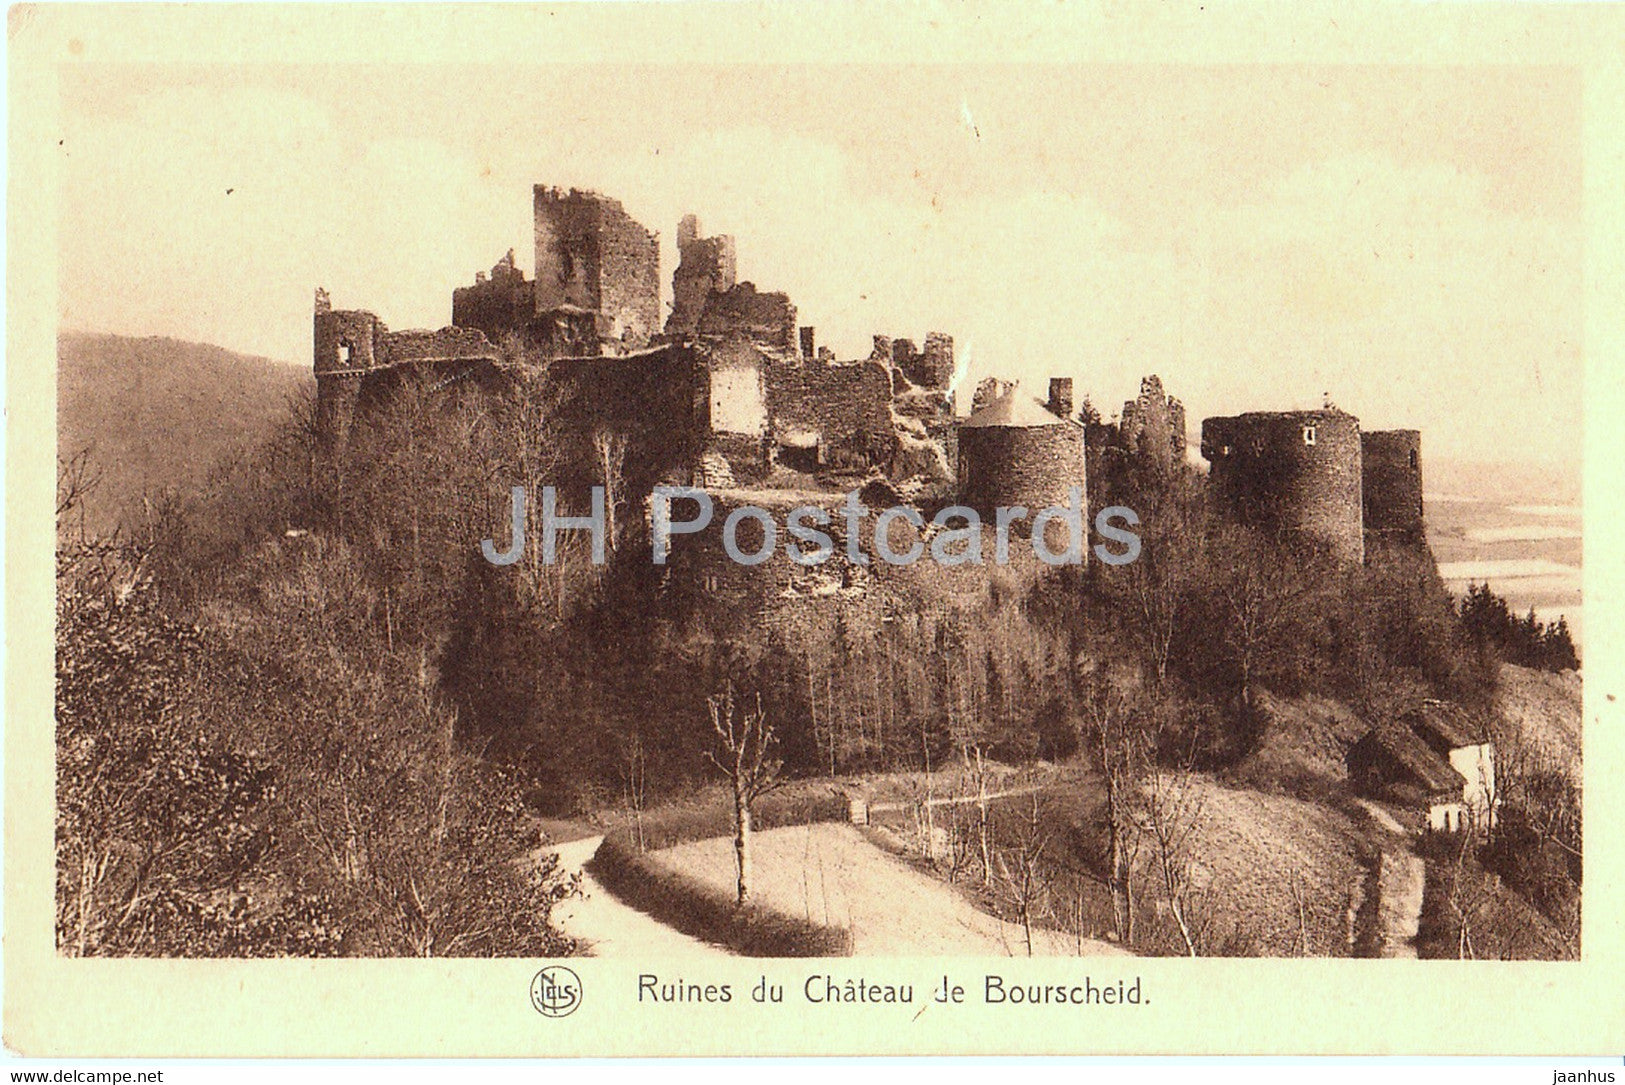 Ruines du Chateau de Bourscheid - castle ruins - old postcard - Luxembourg - unused - JH Postcards